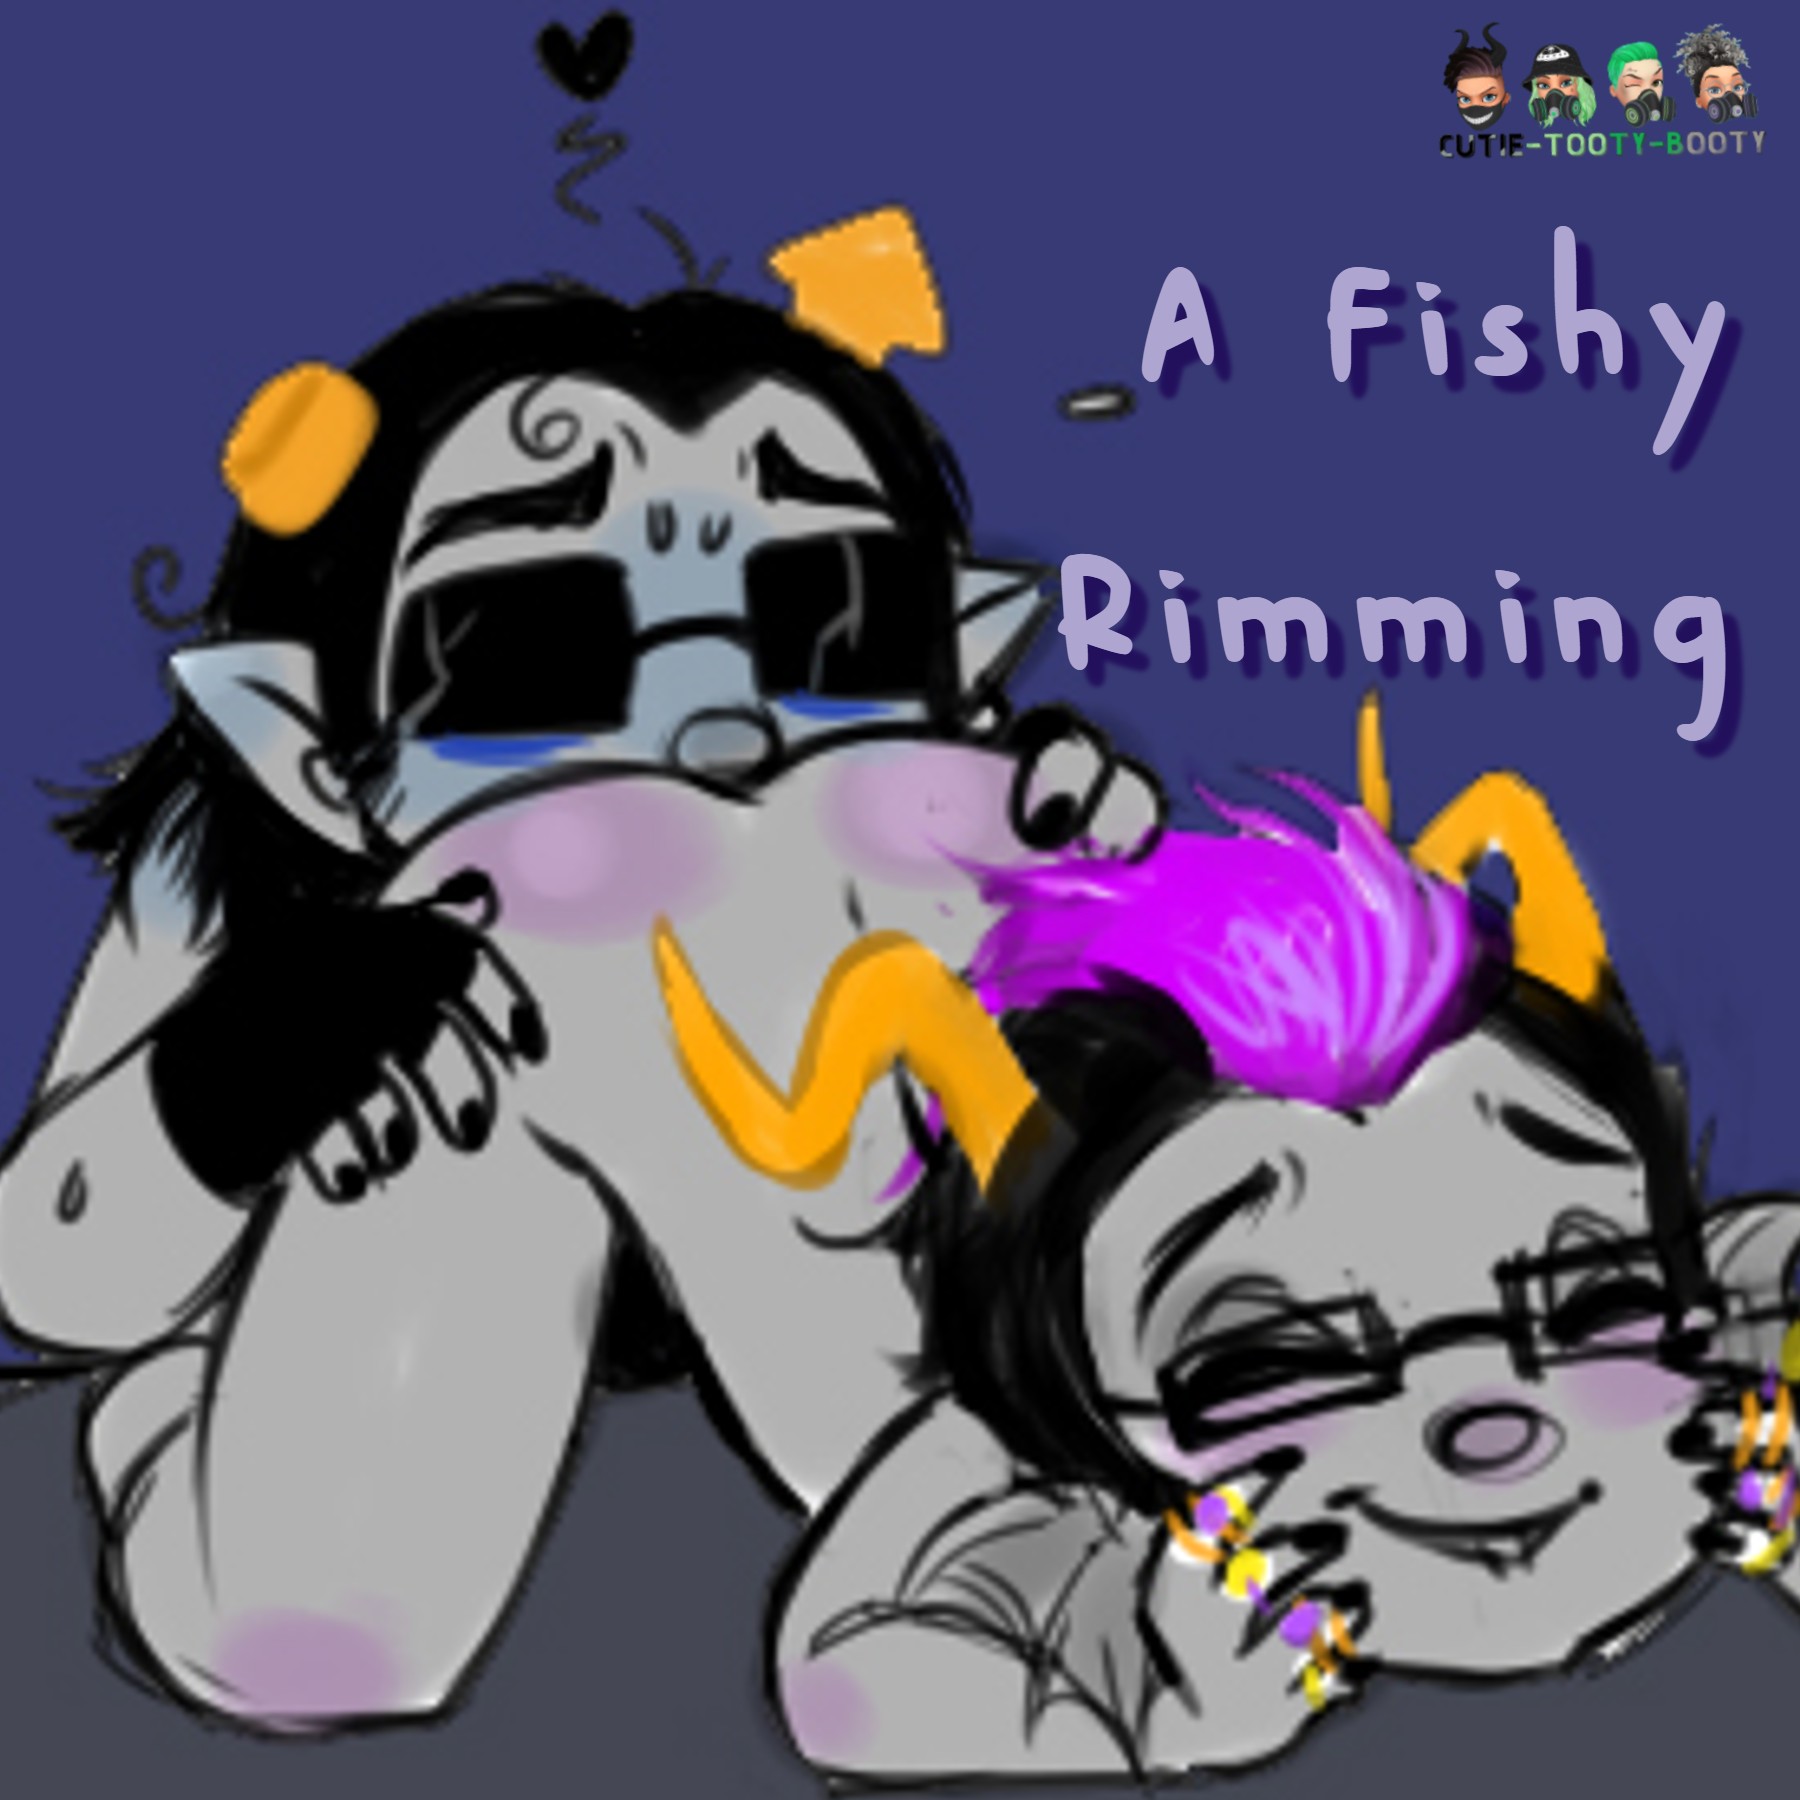 A Fishy Rimming